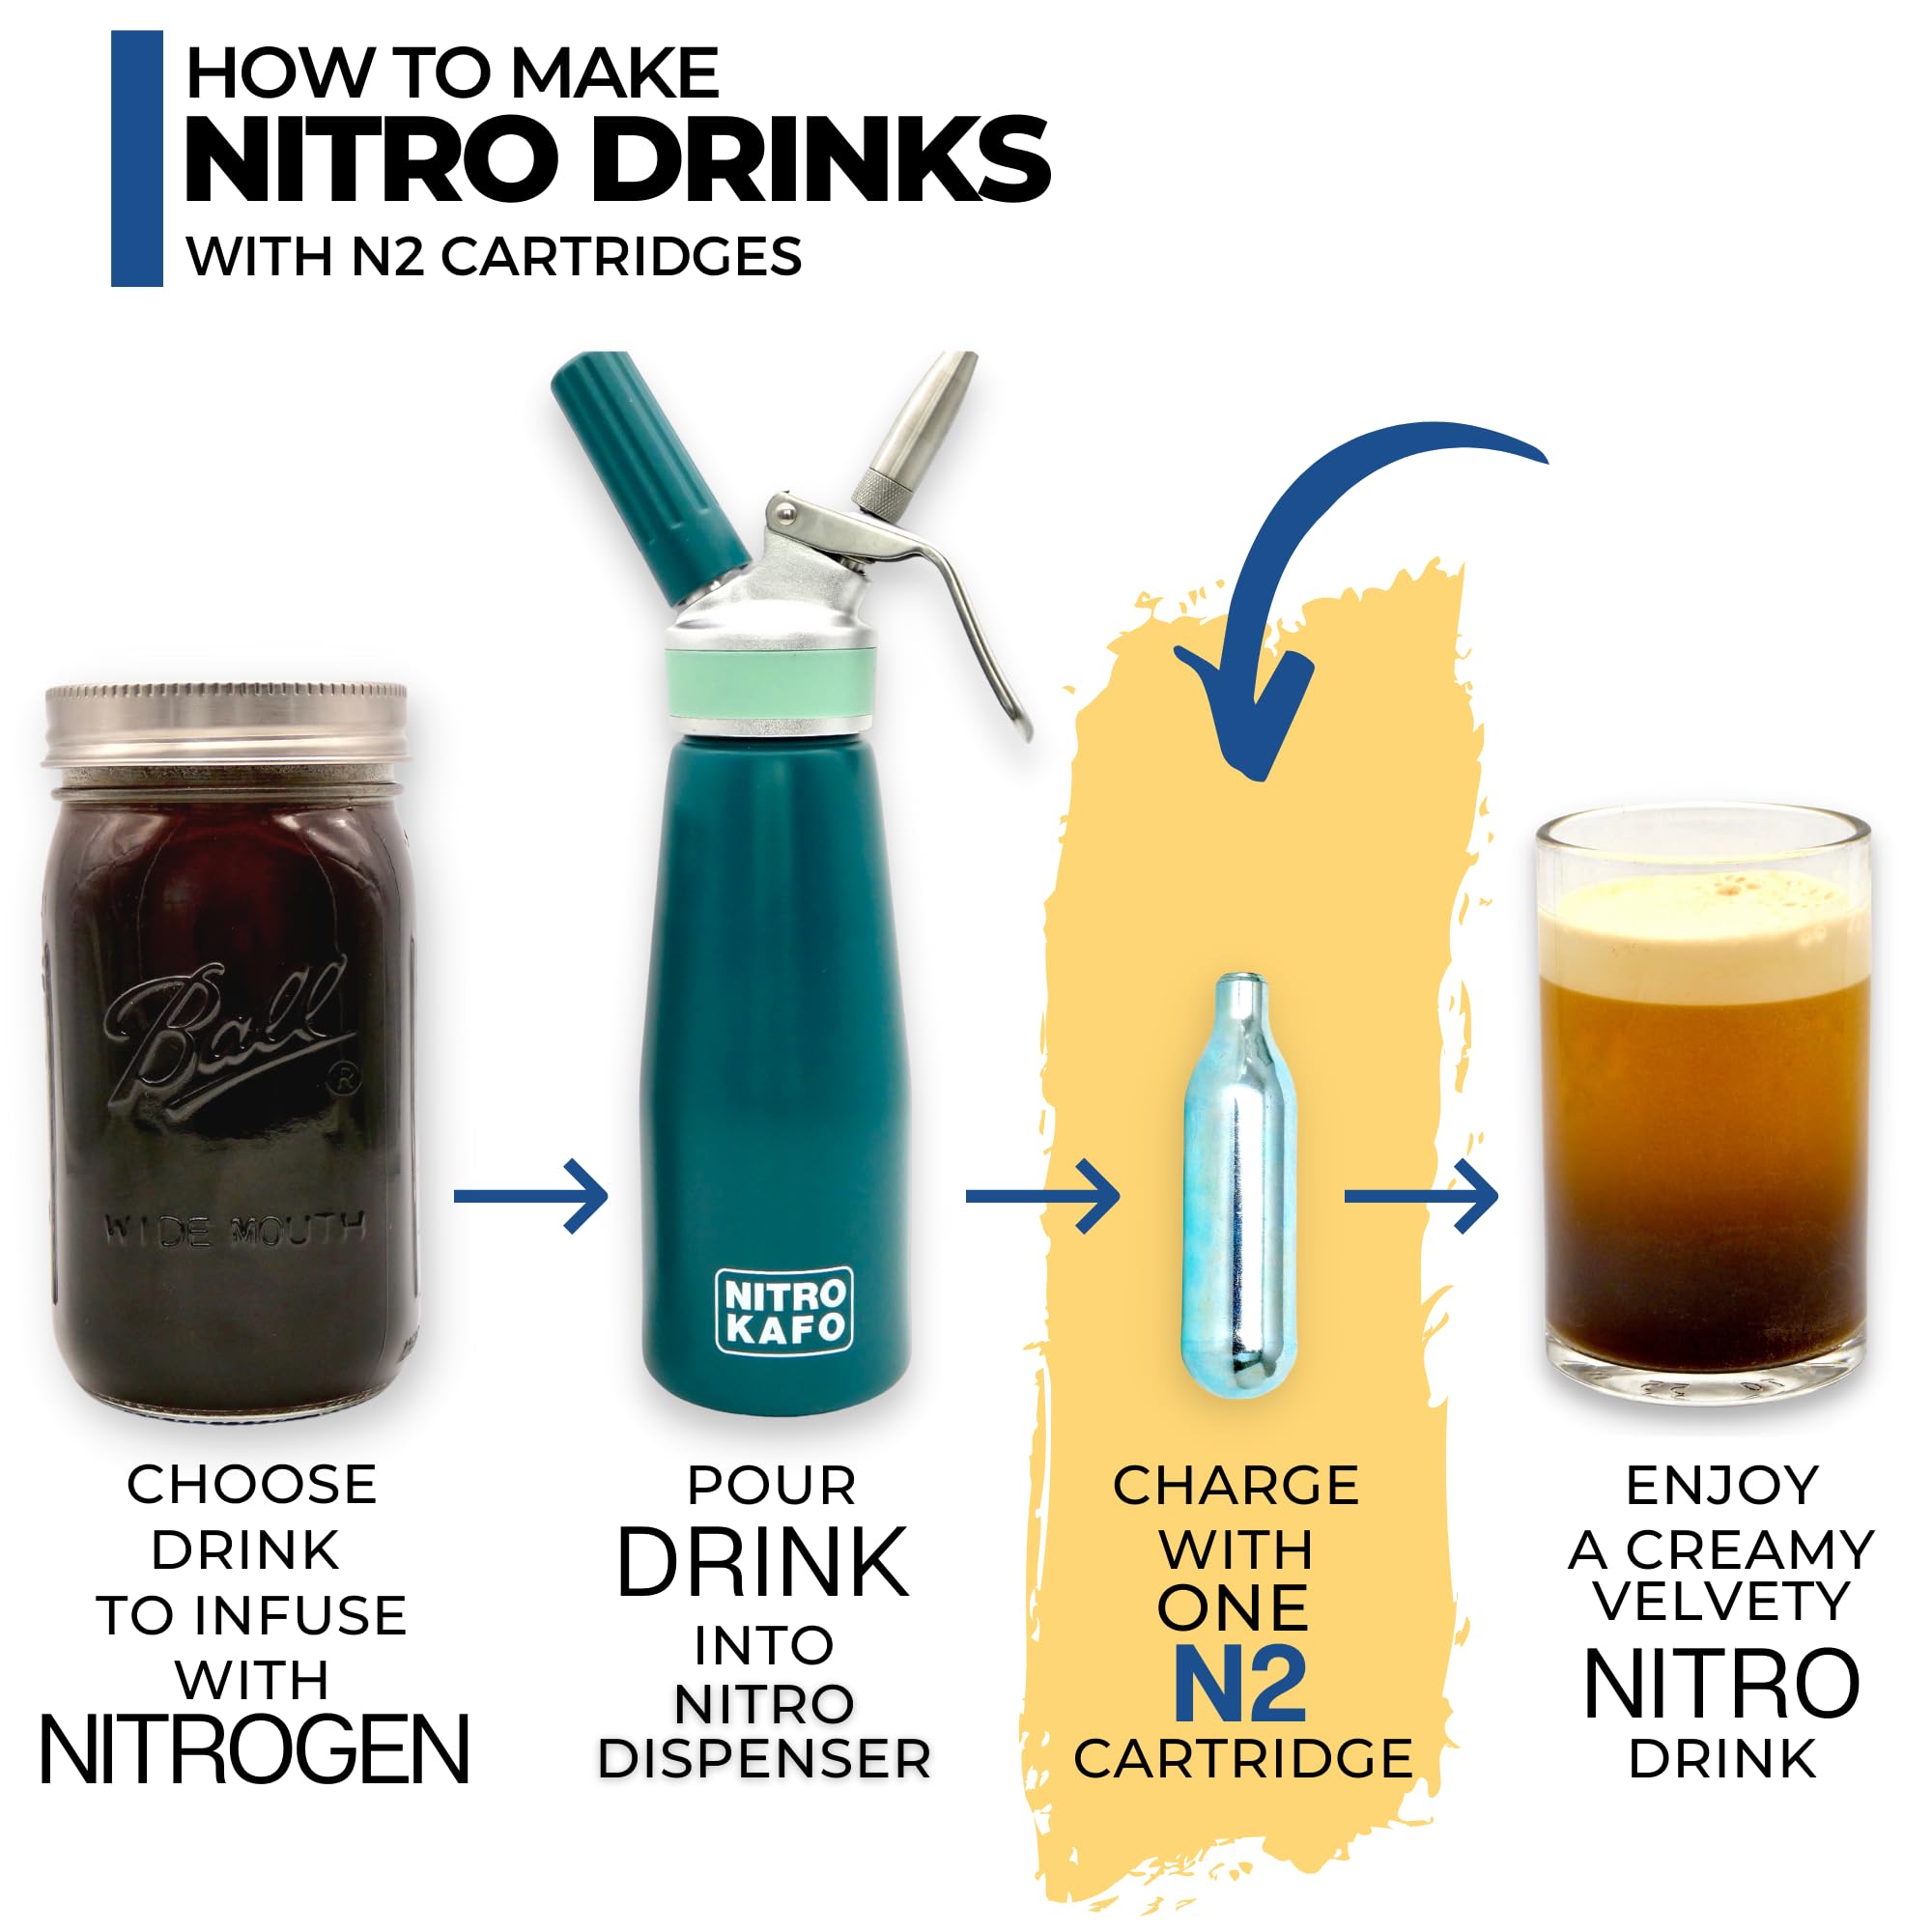 ICO 30pcs Nitrogen Cartridges N2 Cartridges for Nitro Coffee Cold Brew Non-threaded Nitrogen Chargers, 2g